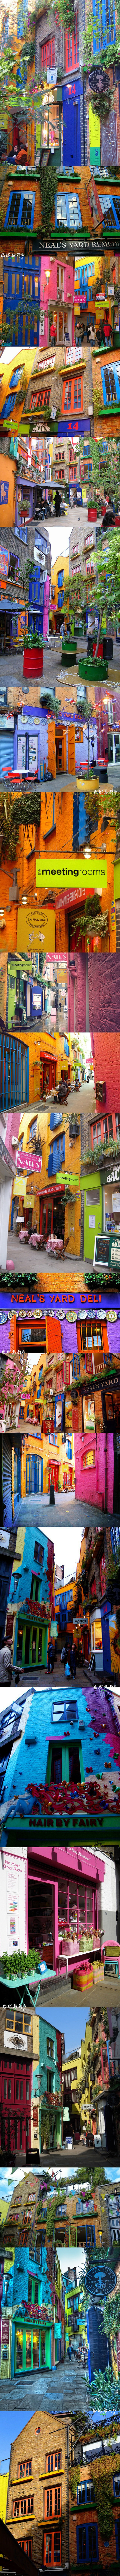 Neal's Yard, London。...